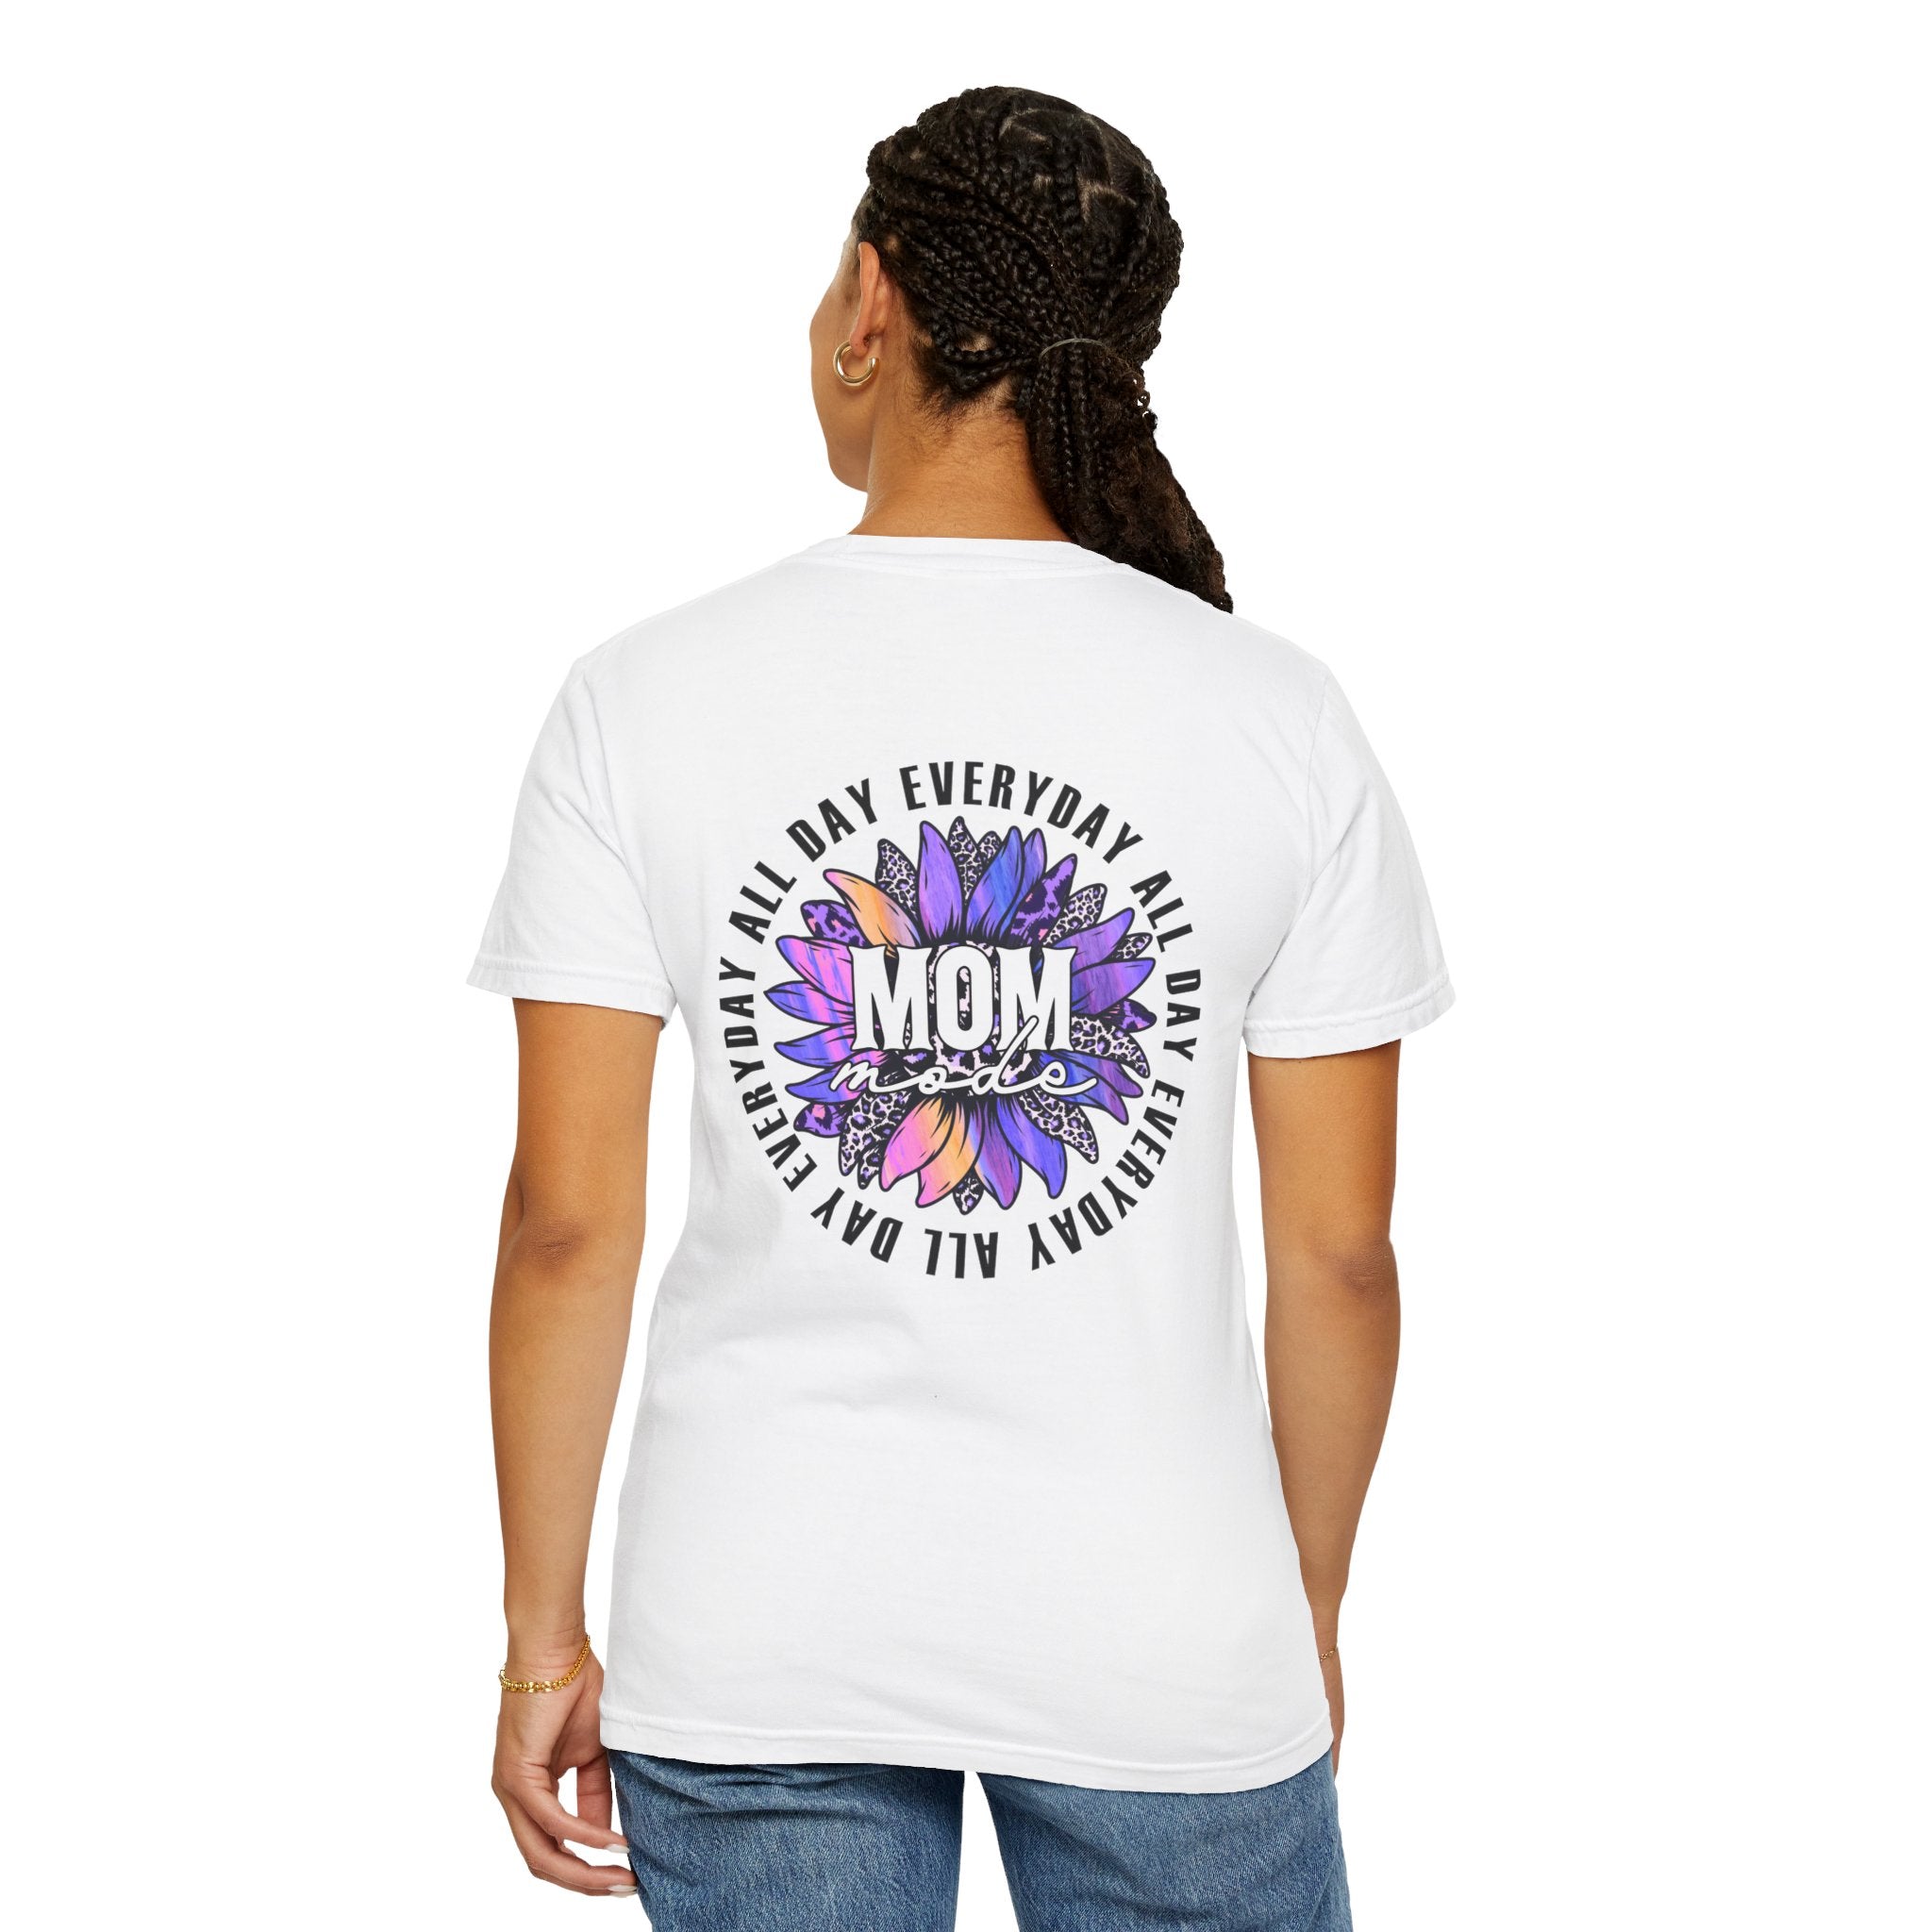 Mama Mode T-shirt